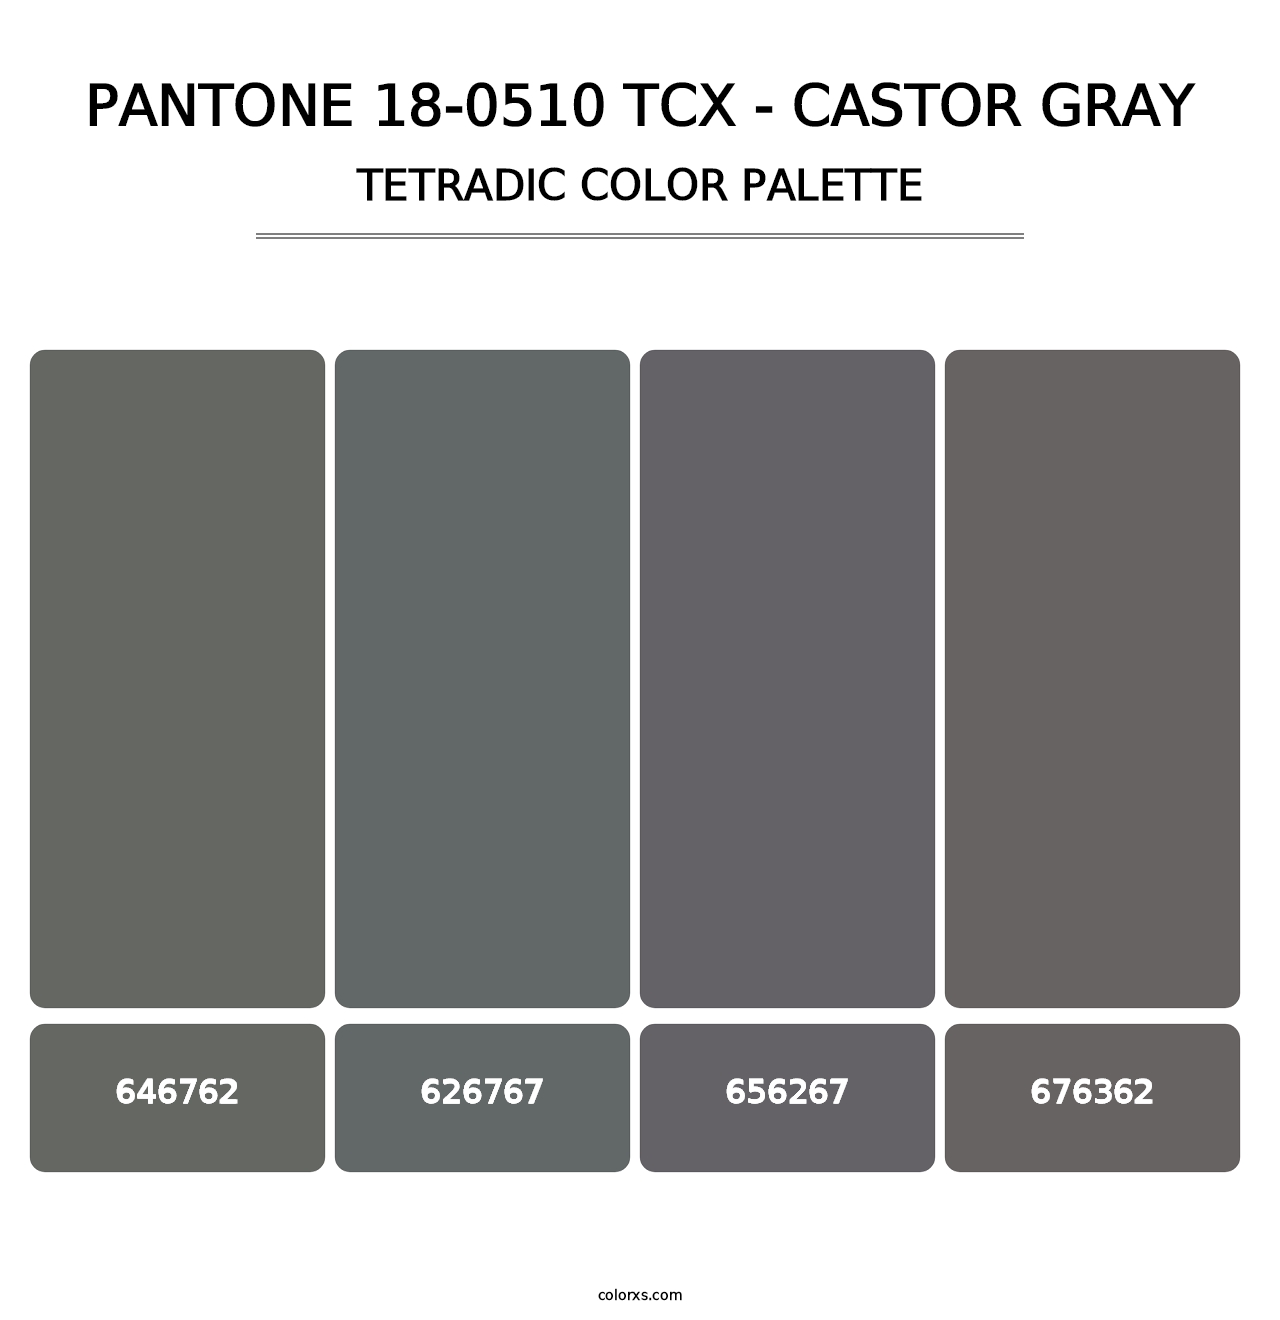 PANTONE 18-0510 TCX - Castor Gray - Tetradic Color Palette